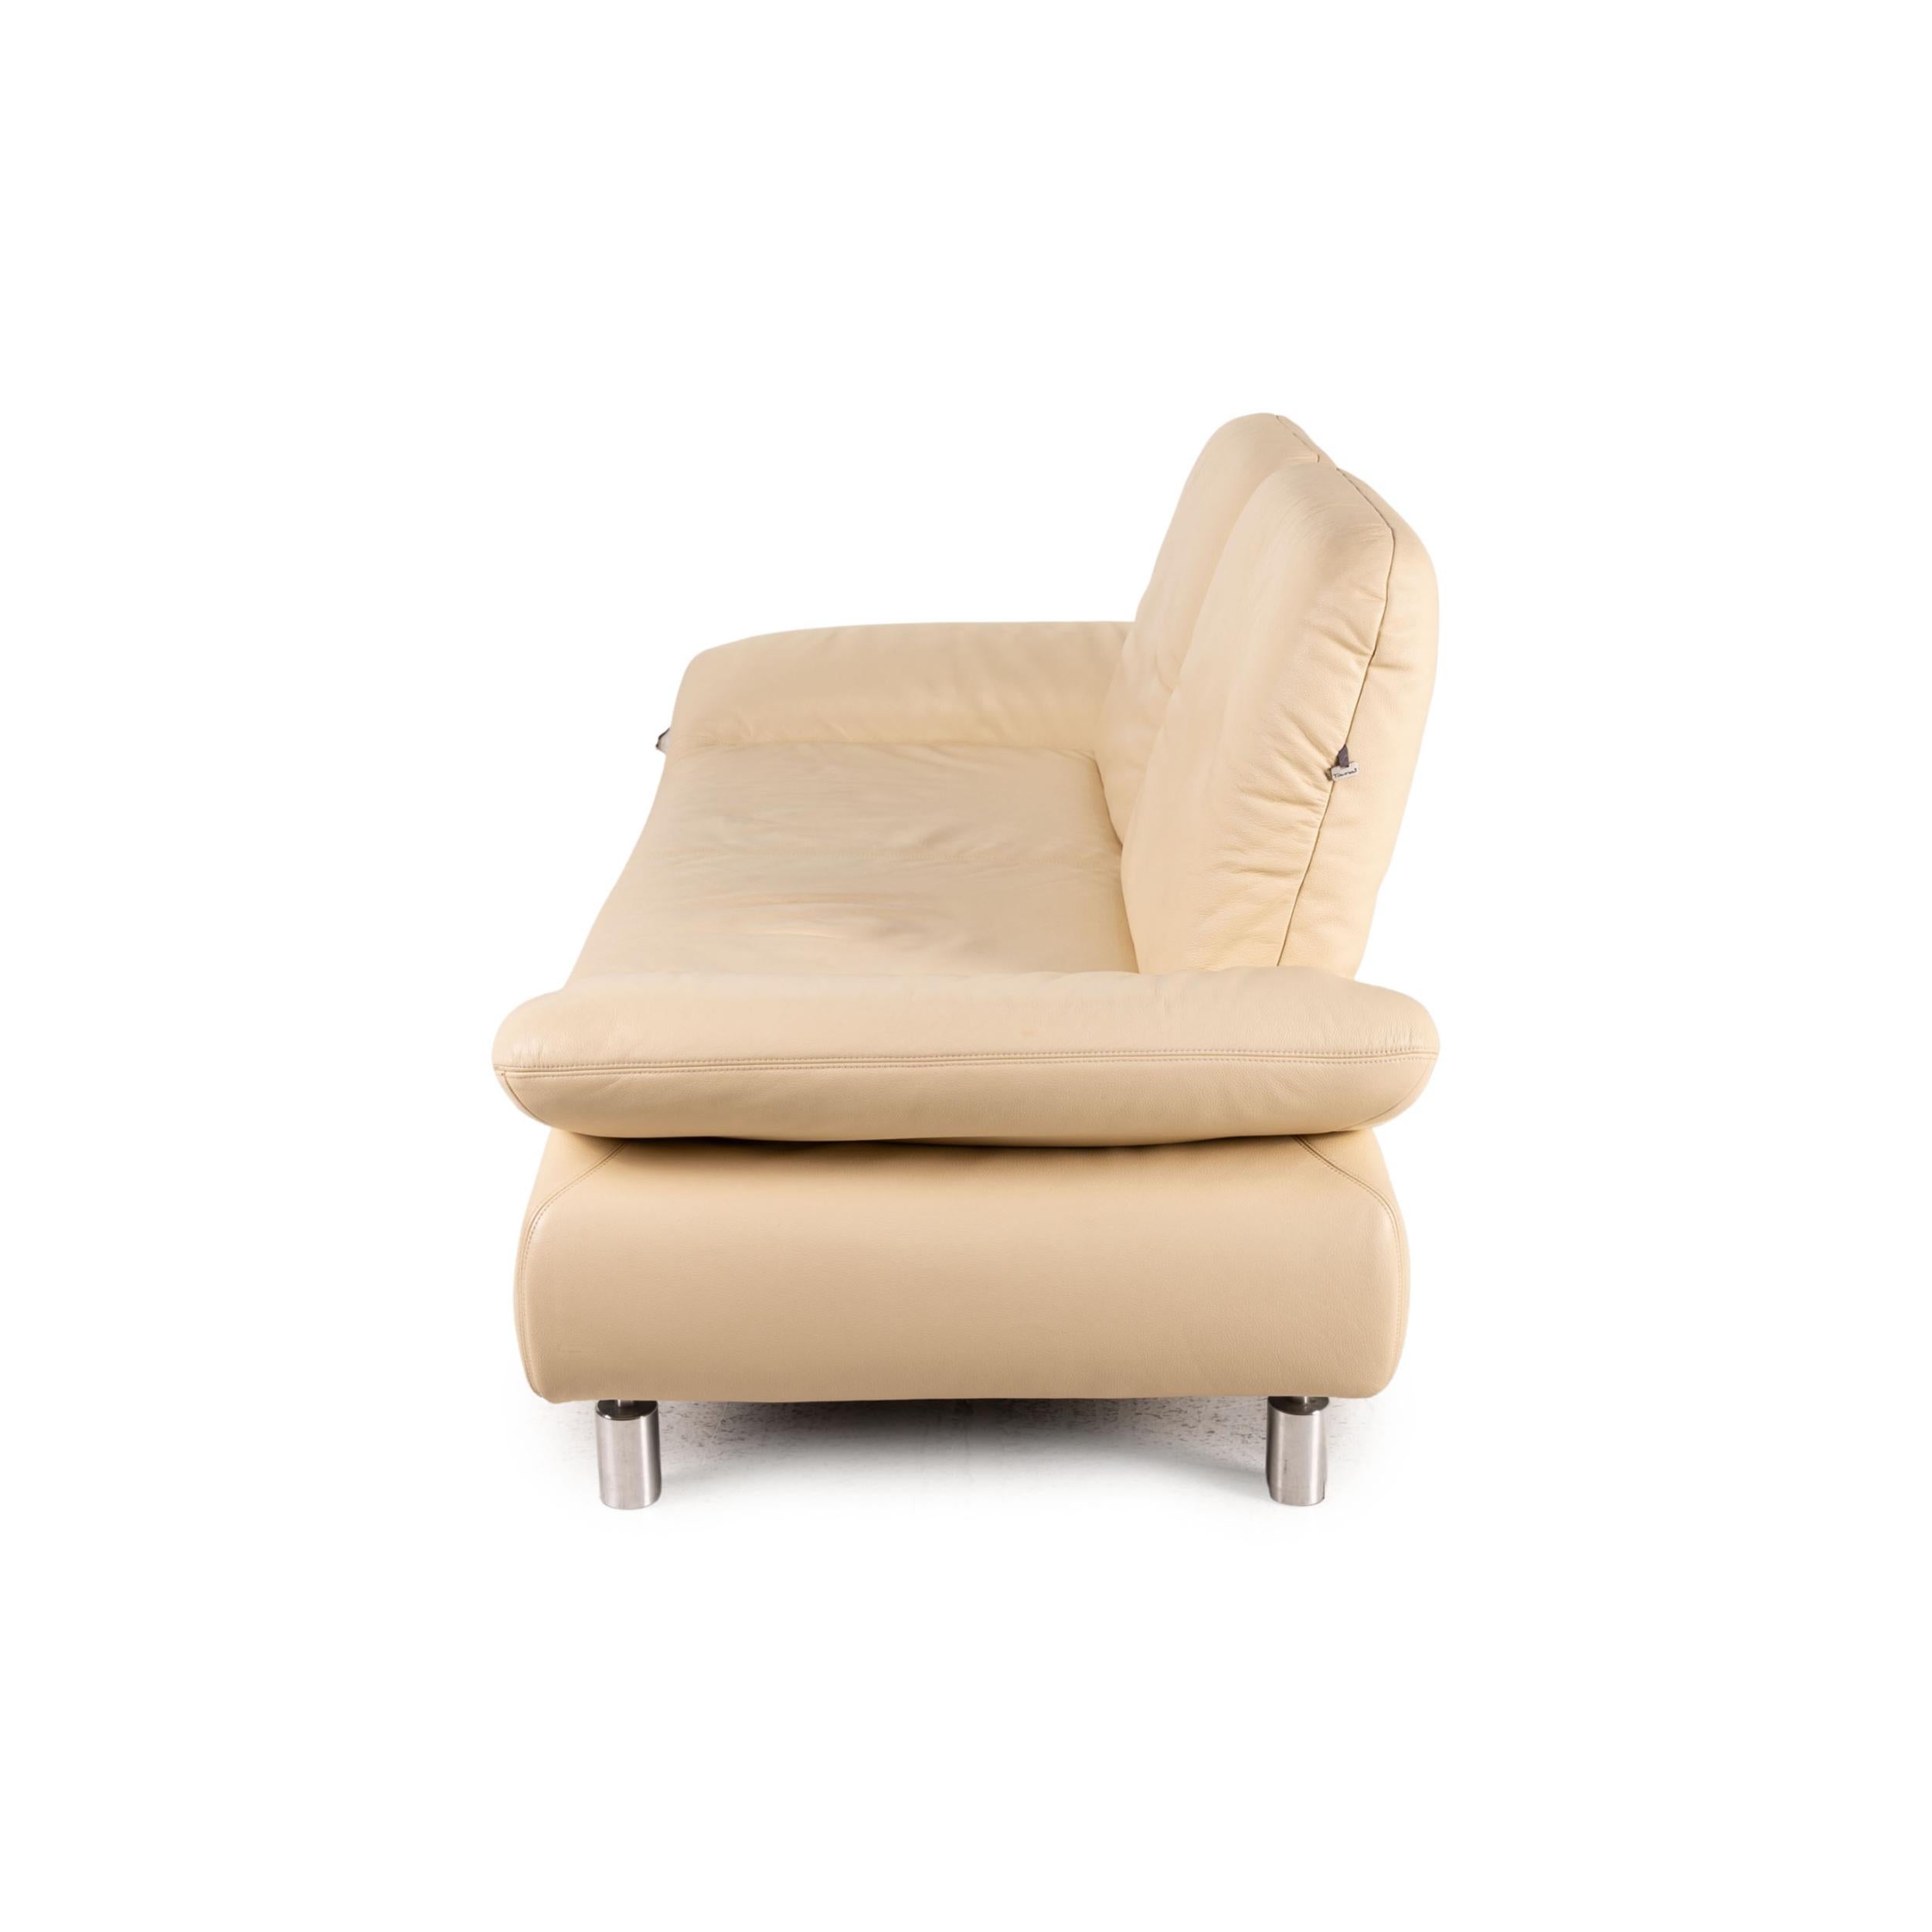 Koinor Rivoli leather sofa set cream 1x two-seater 1x stool function For Sale 9